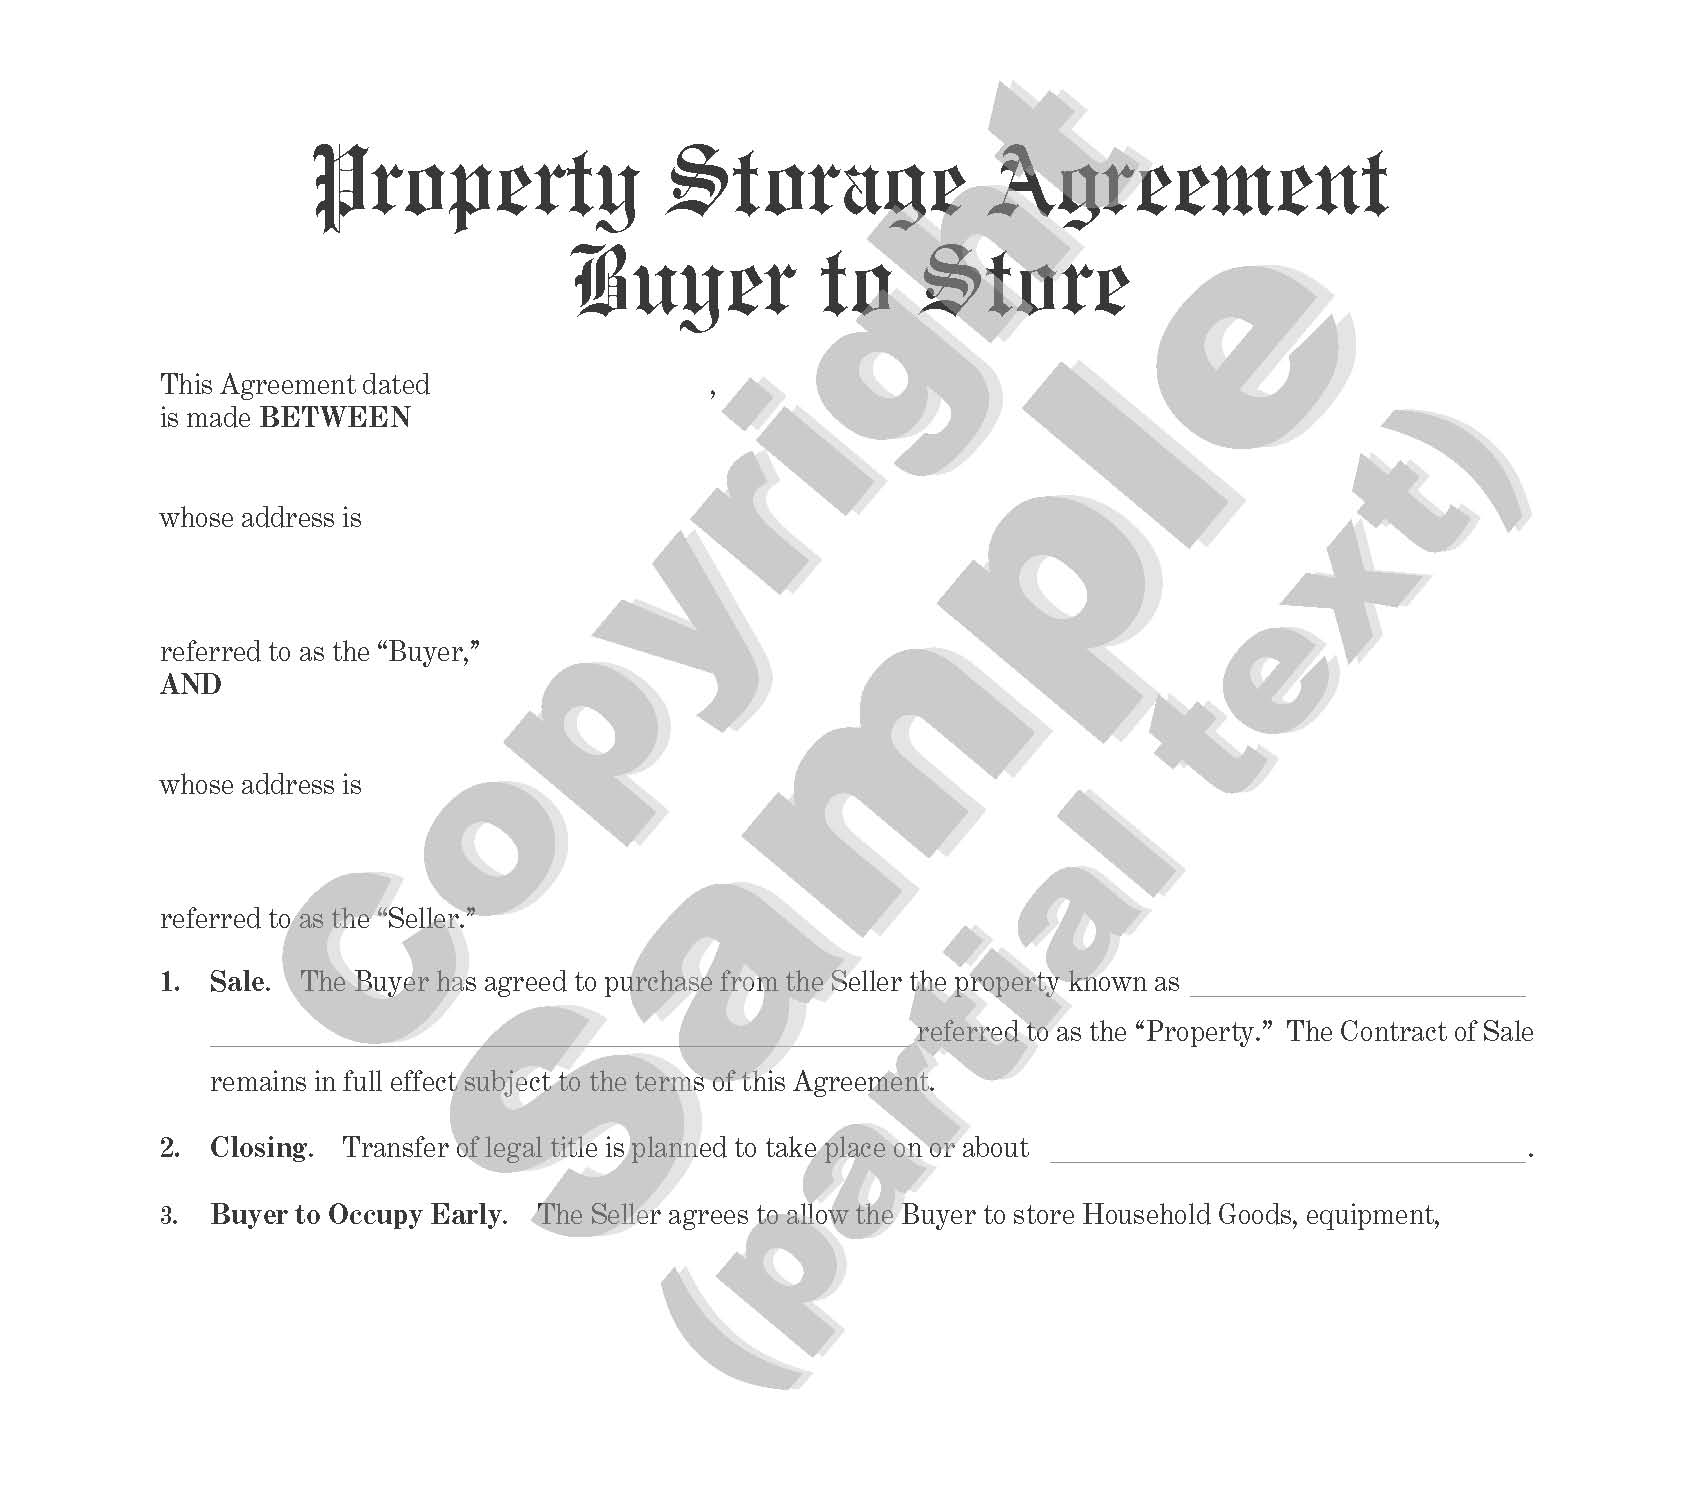 Property Storage Agreement Buyer to Store - Plain Language